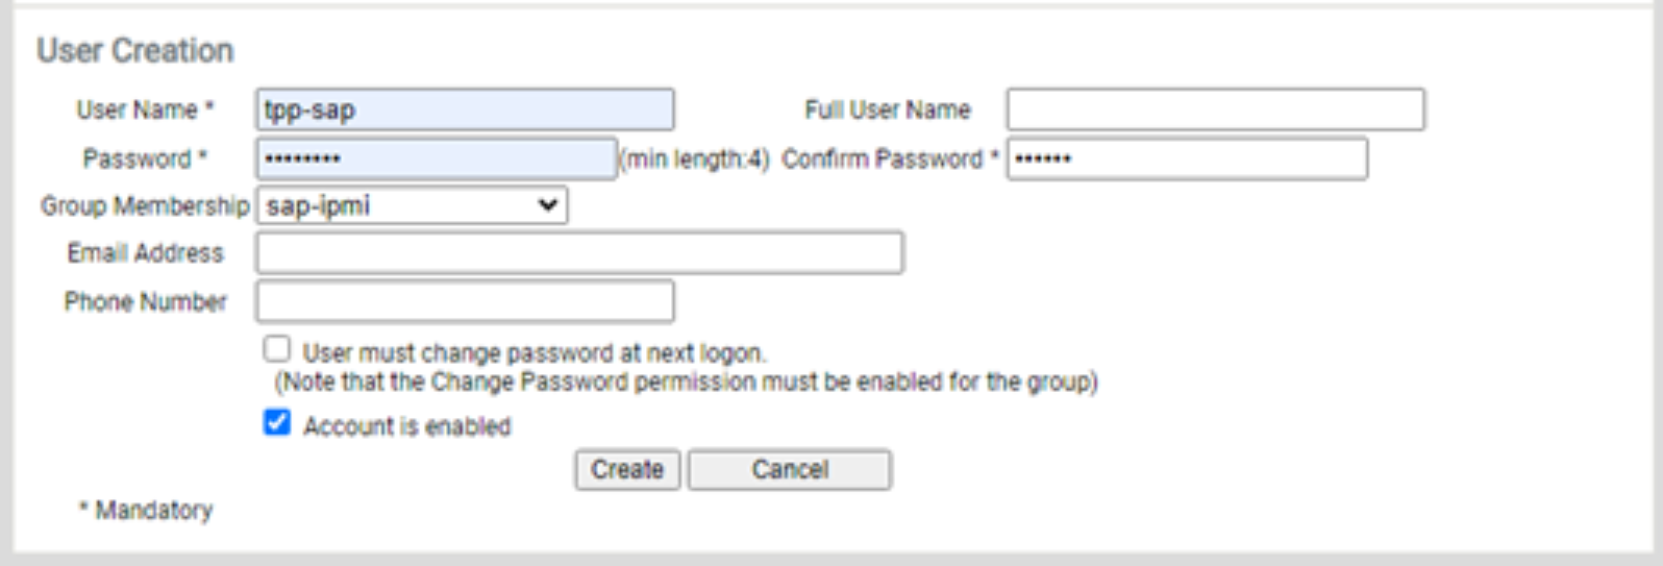 A screenshot showing IPMI user permissions